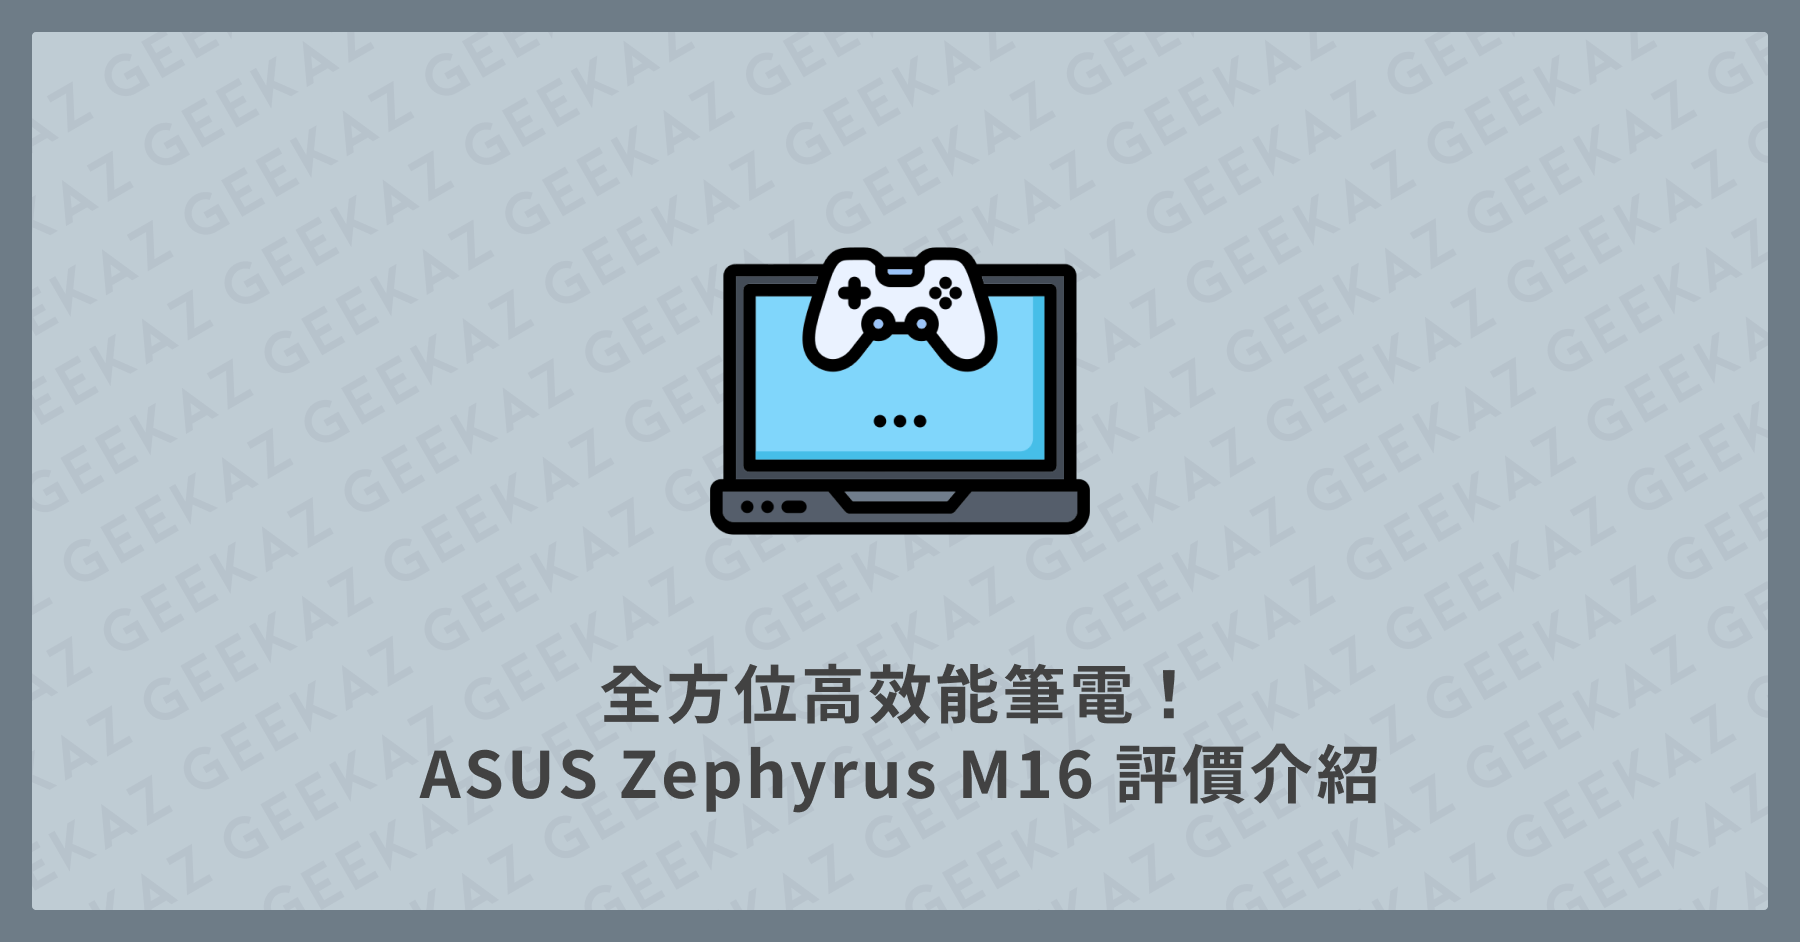 ASUS Zephyrus M16 評價